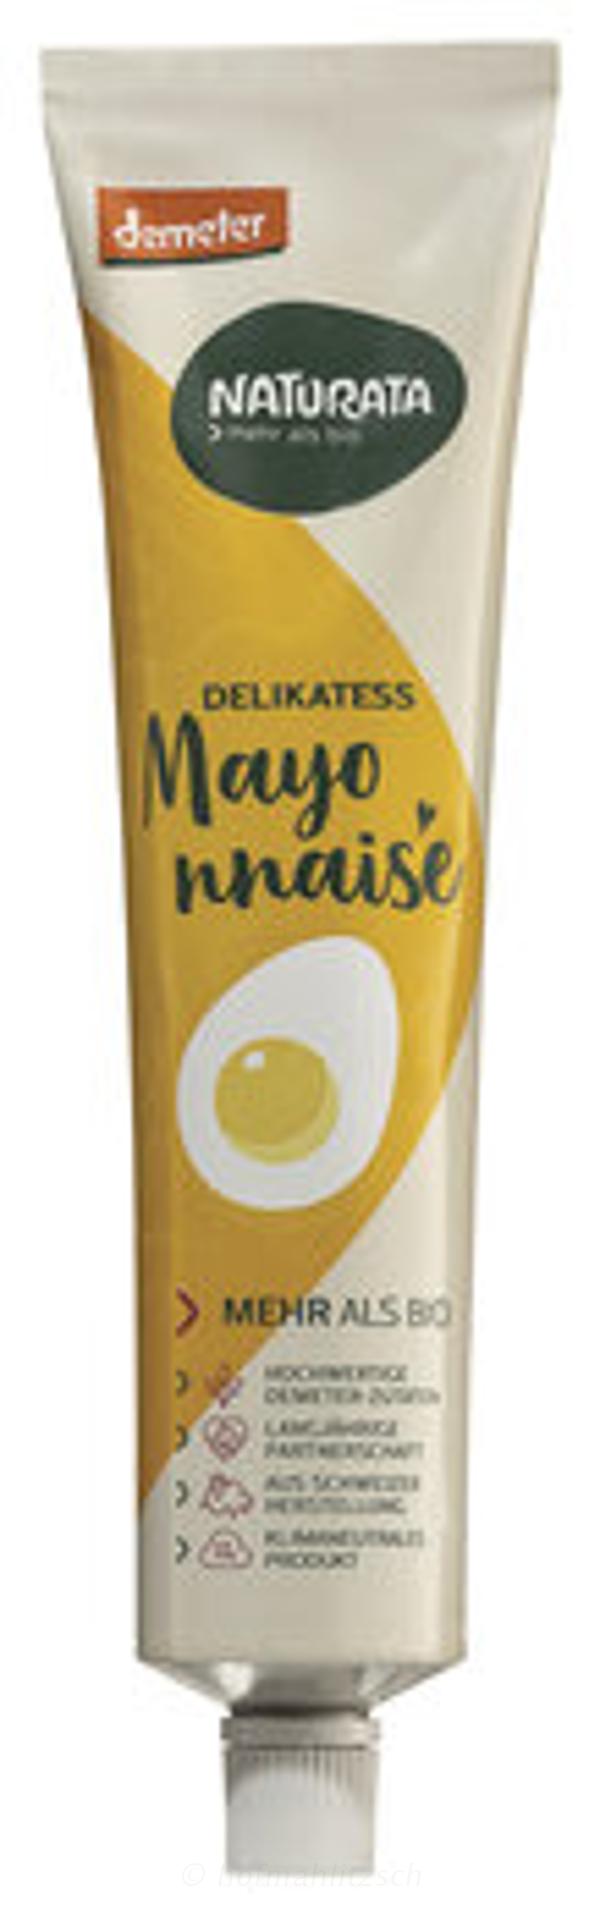 Produktfoto zu Delikatess-Mayonnaise, Tube